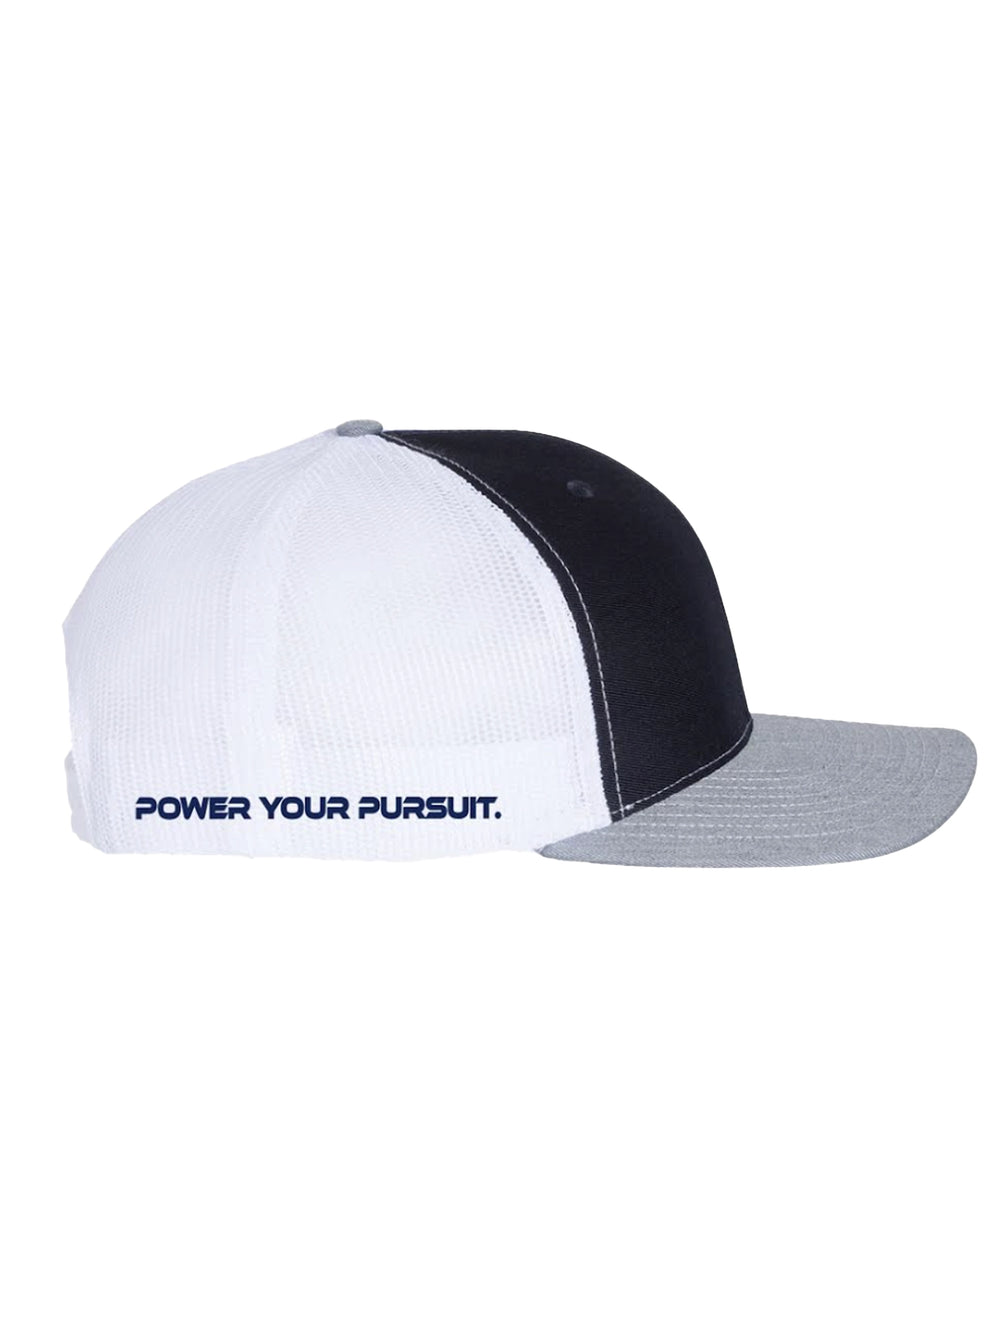 ABYSS® - Navy on White Richardson Mesh Trucker Hat